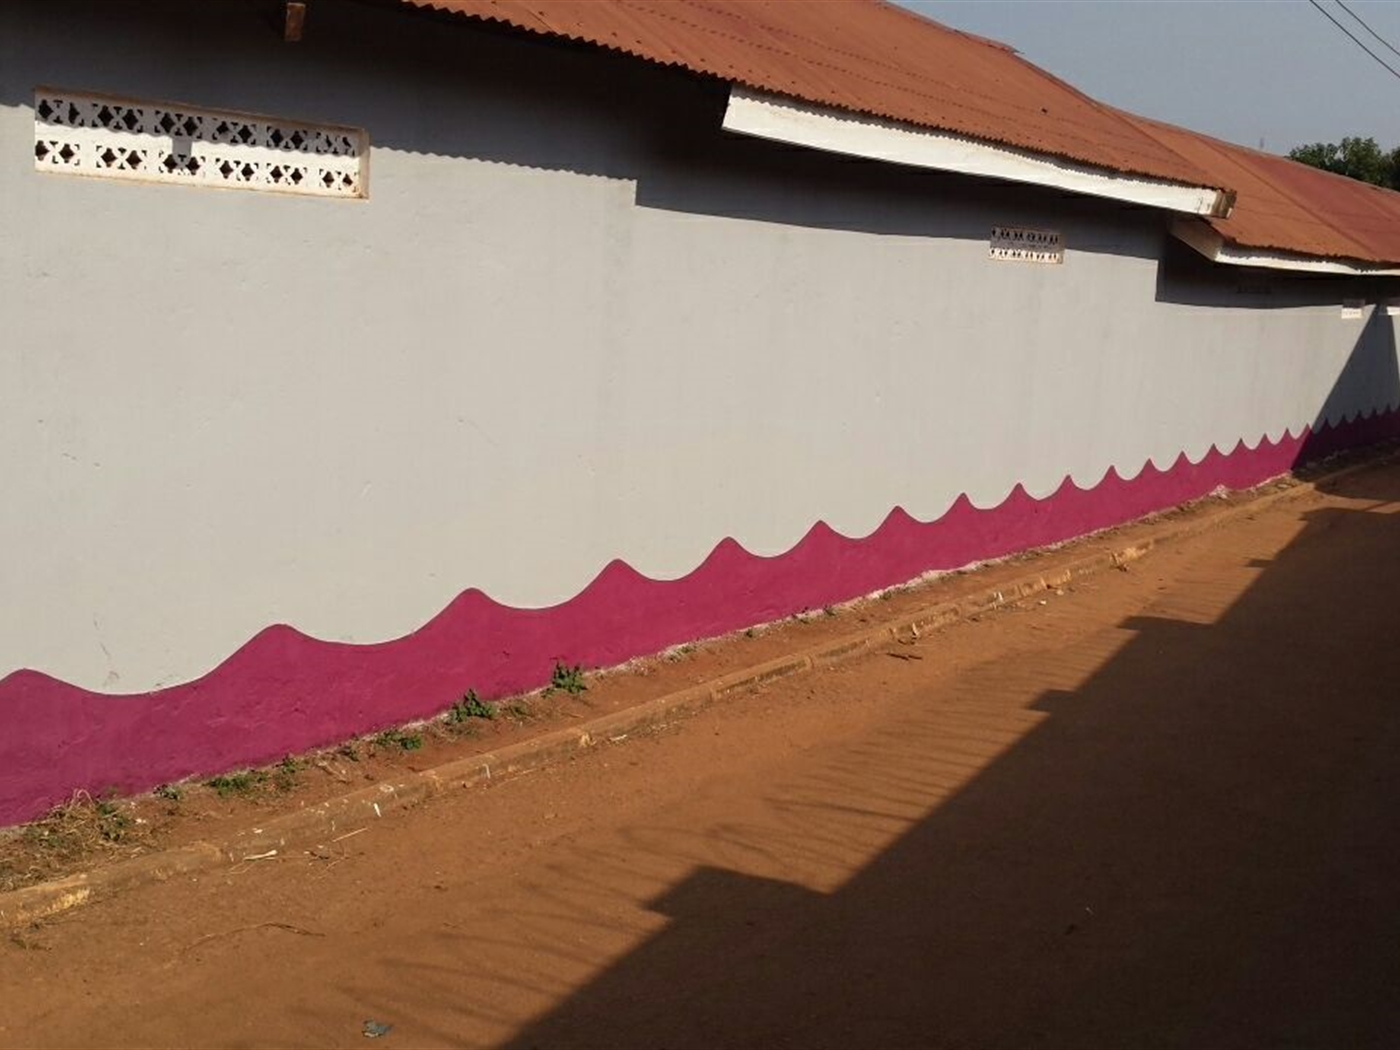 School for sale in Kitende Wakiso